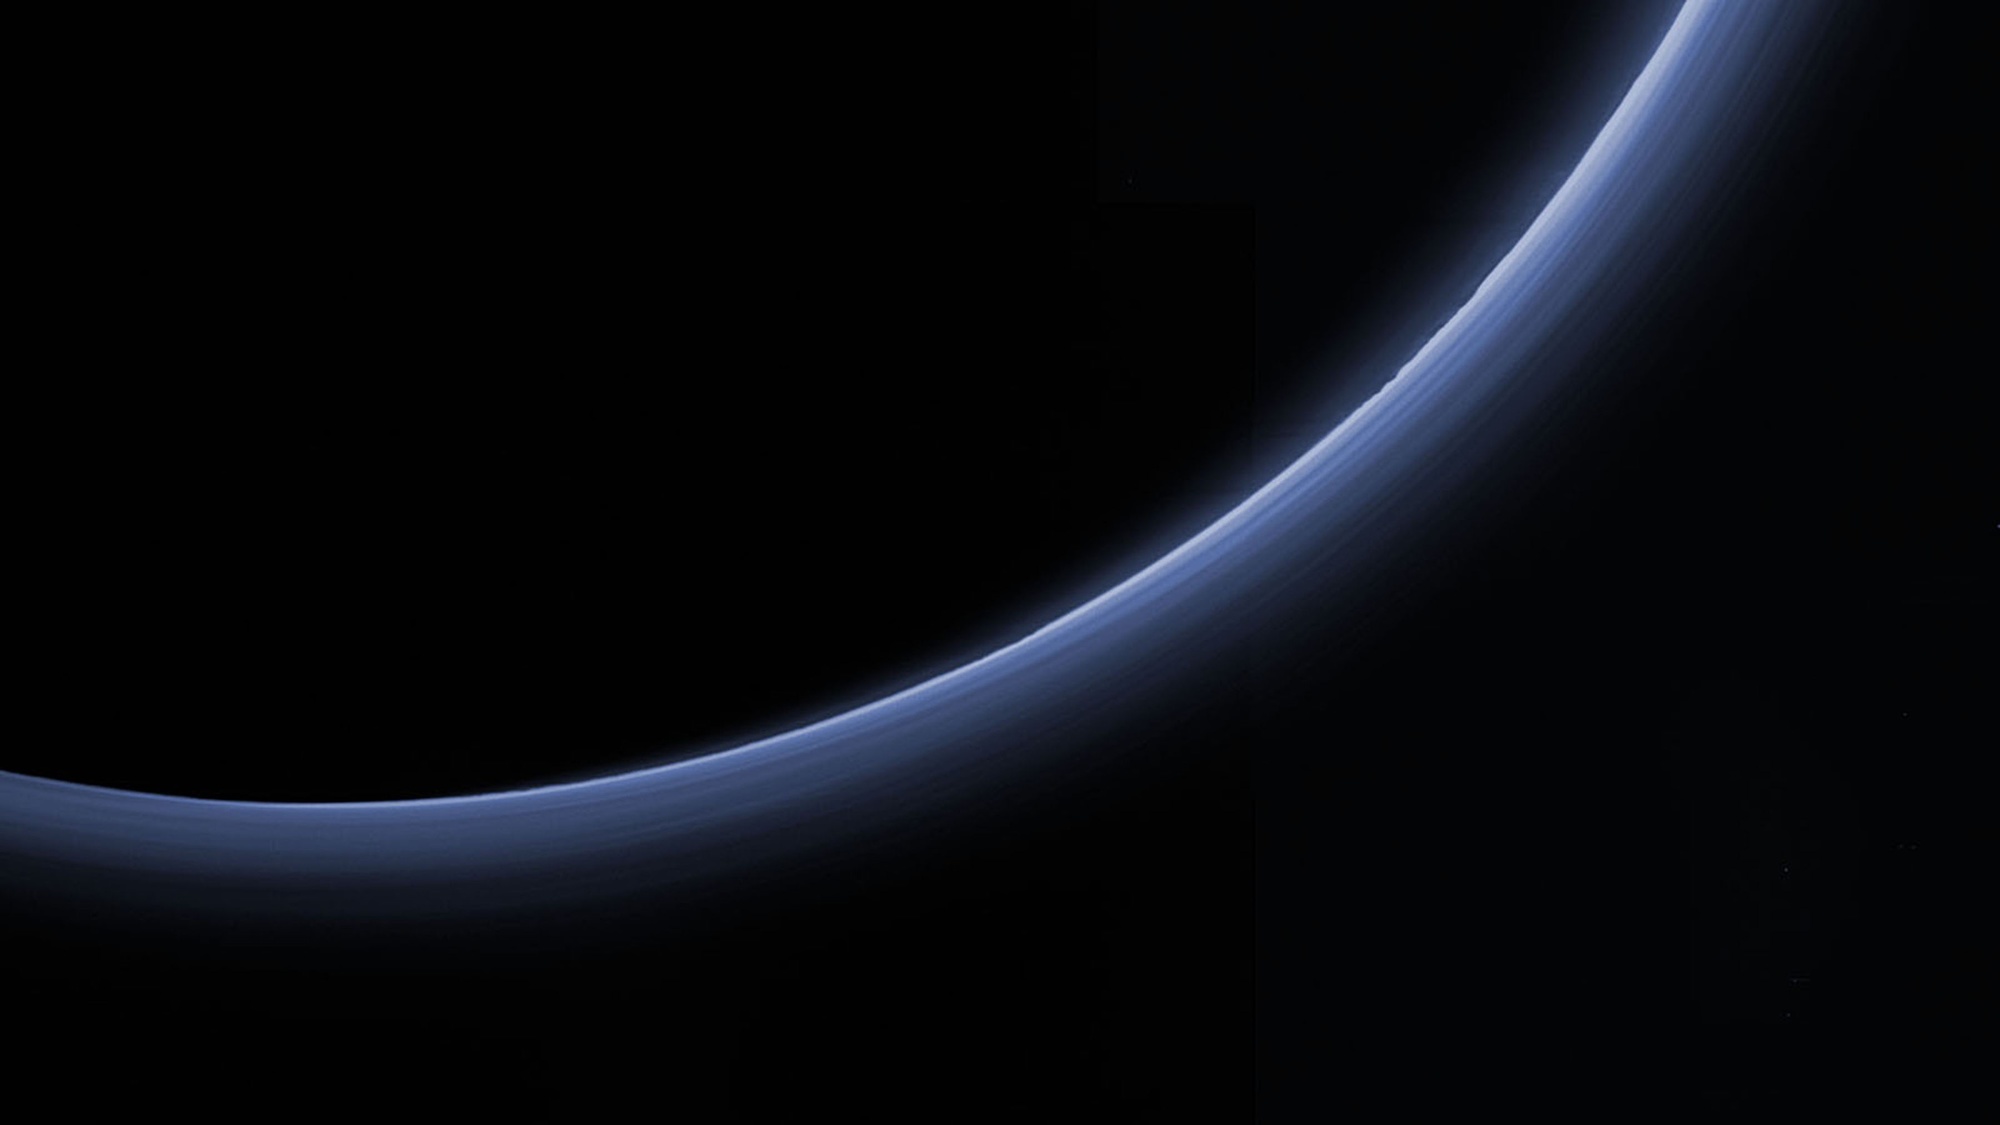 Slika visoke rezolucije koju je snimila svemirska letjelica New Horizons koja prikazuje tanku atmosferu Plutona.Izvor: New Horizons.